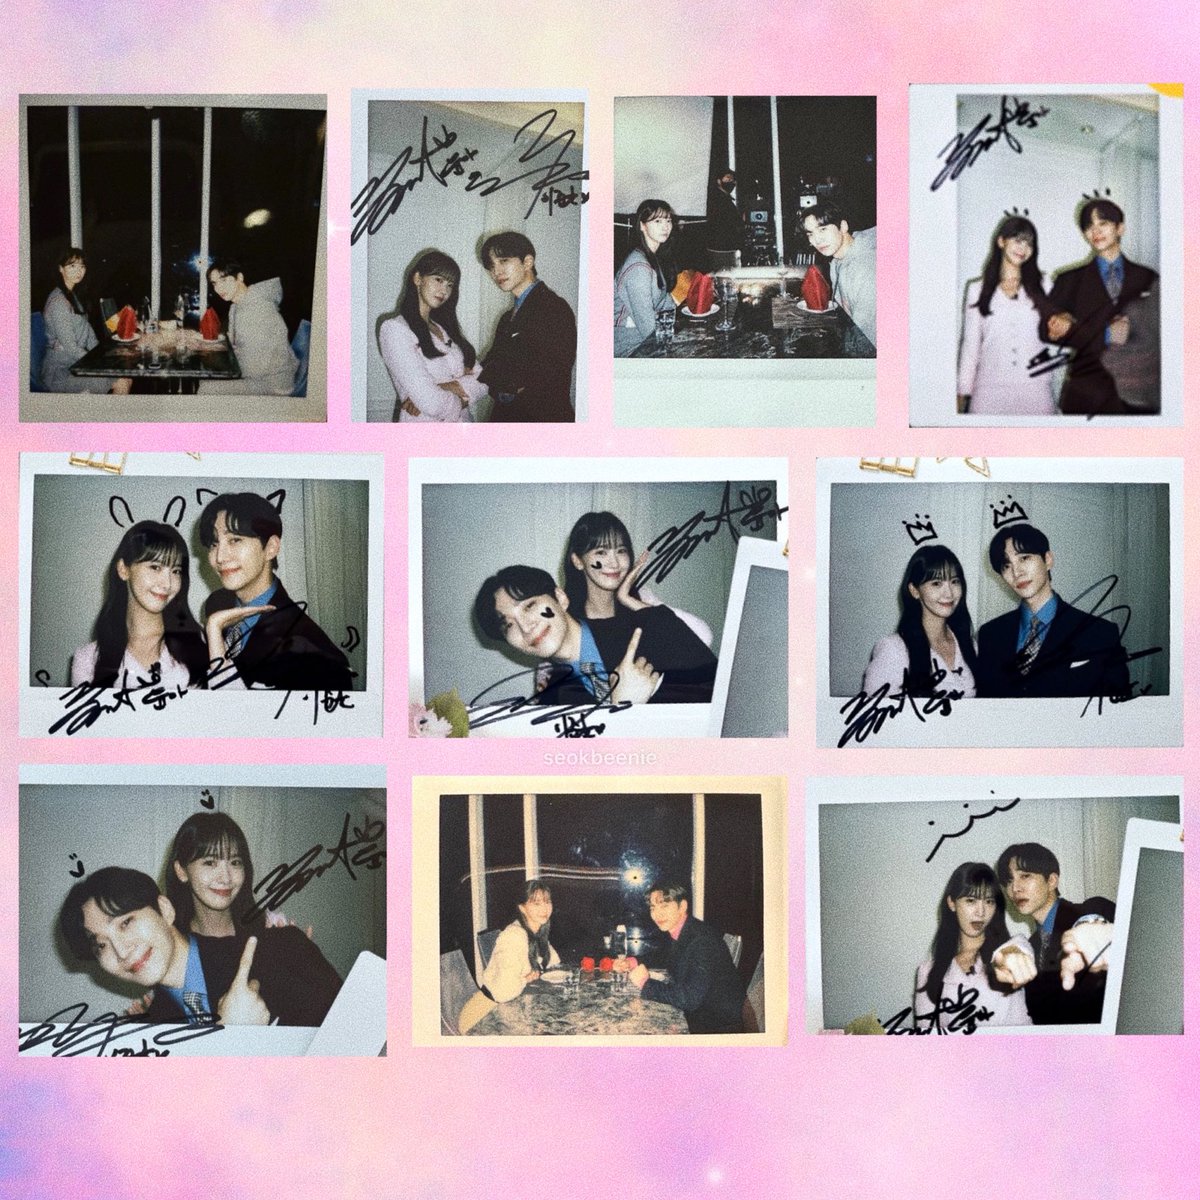 Polaroid collection 🎞️📷
#LimYoonA #YoonA #LeeJunho
#KingTheLand